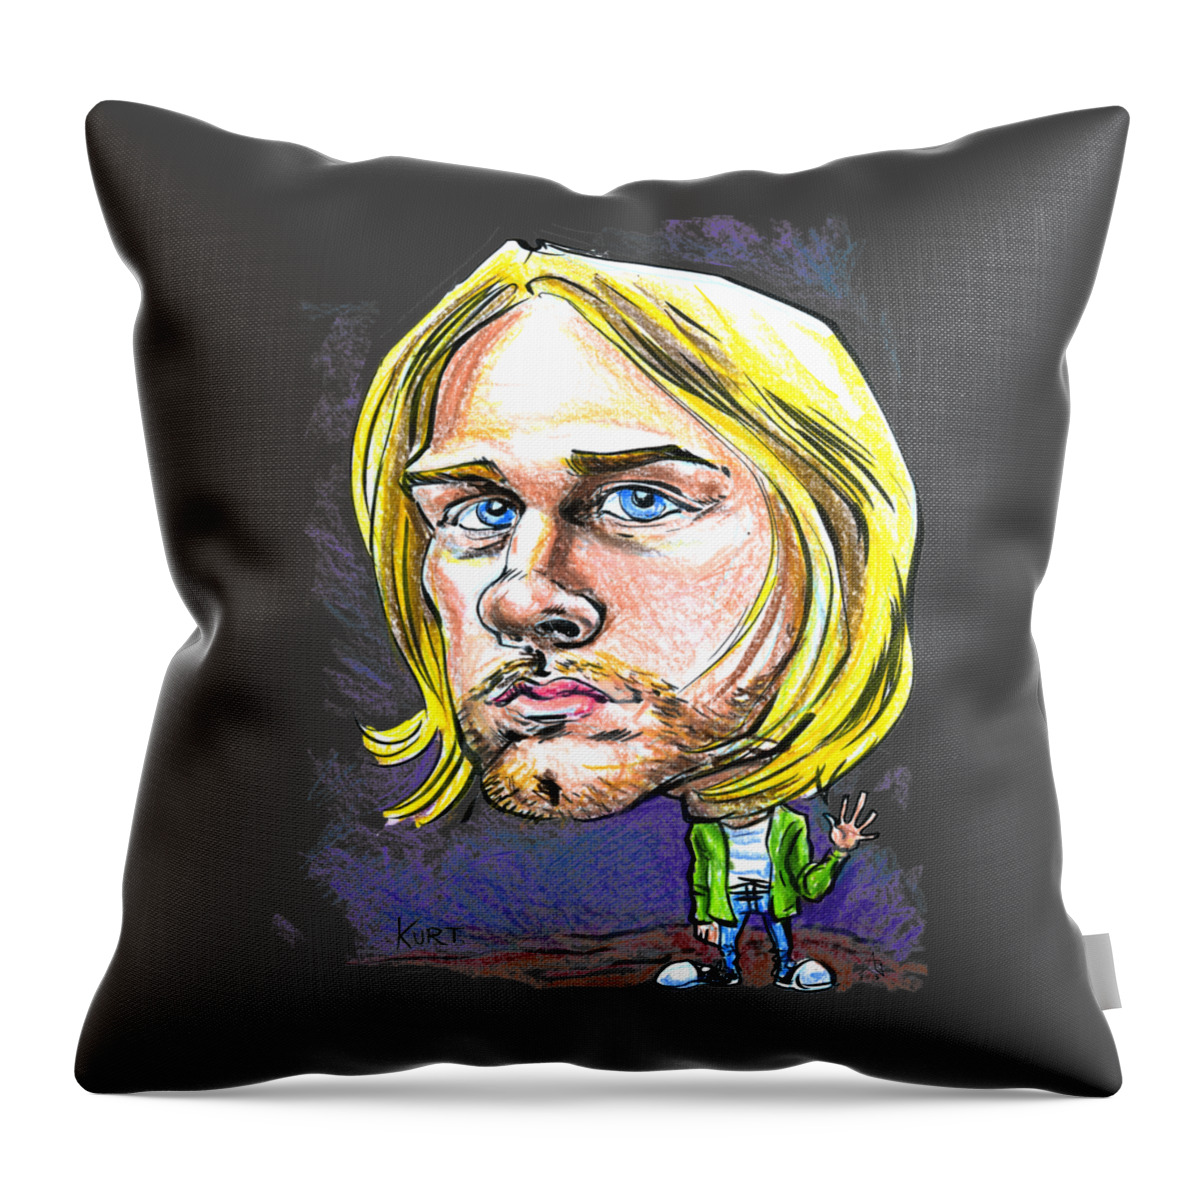 Caricature Throw Pillow featuring the drawing Hello Kurt by John Ashton Golden